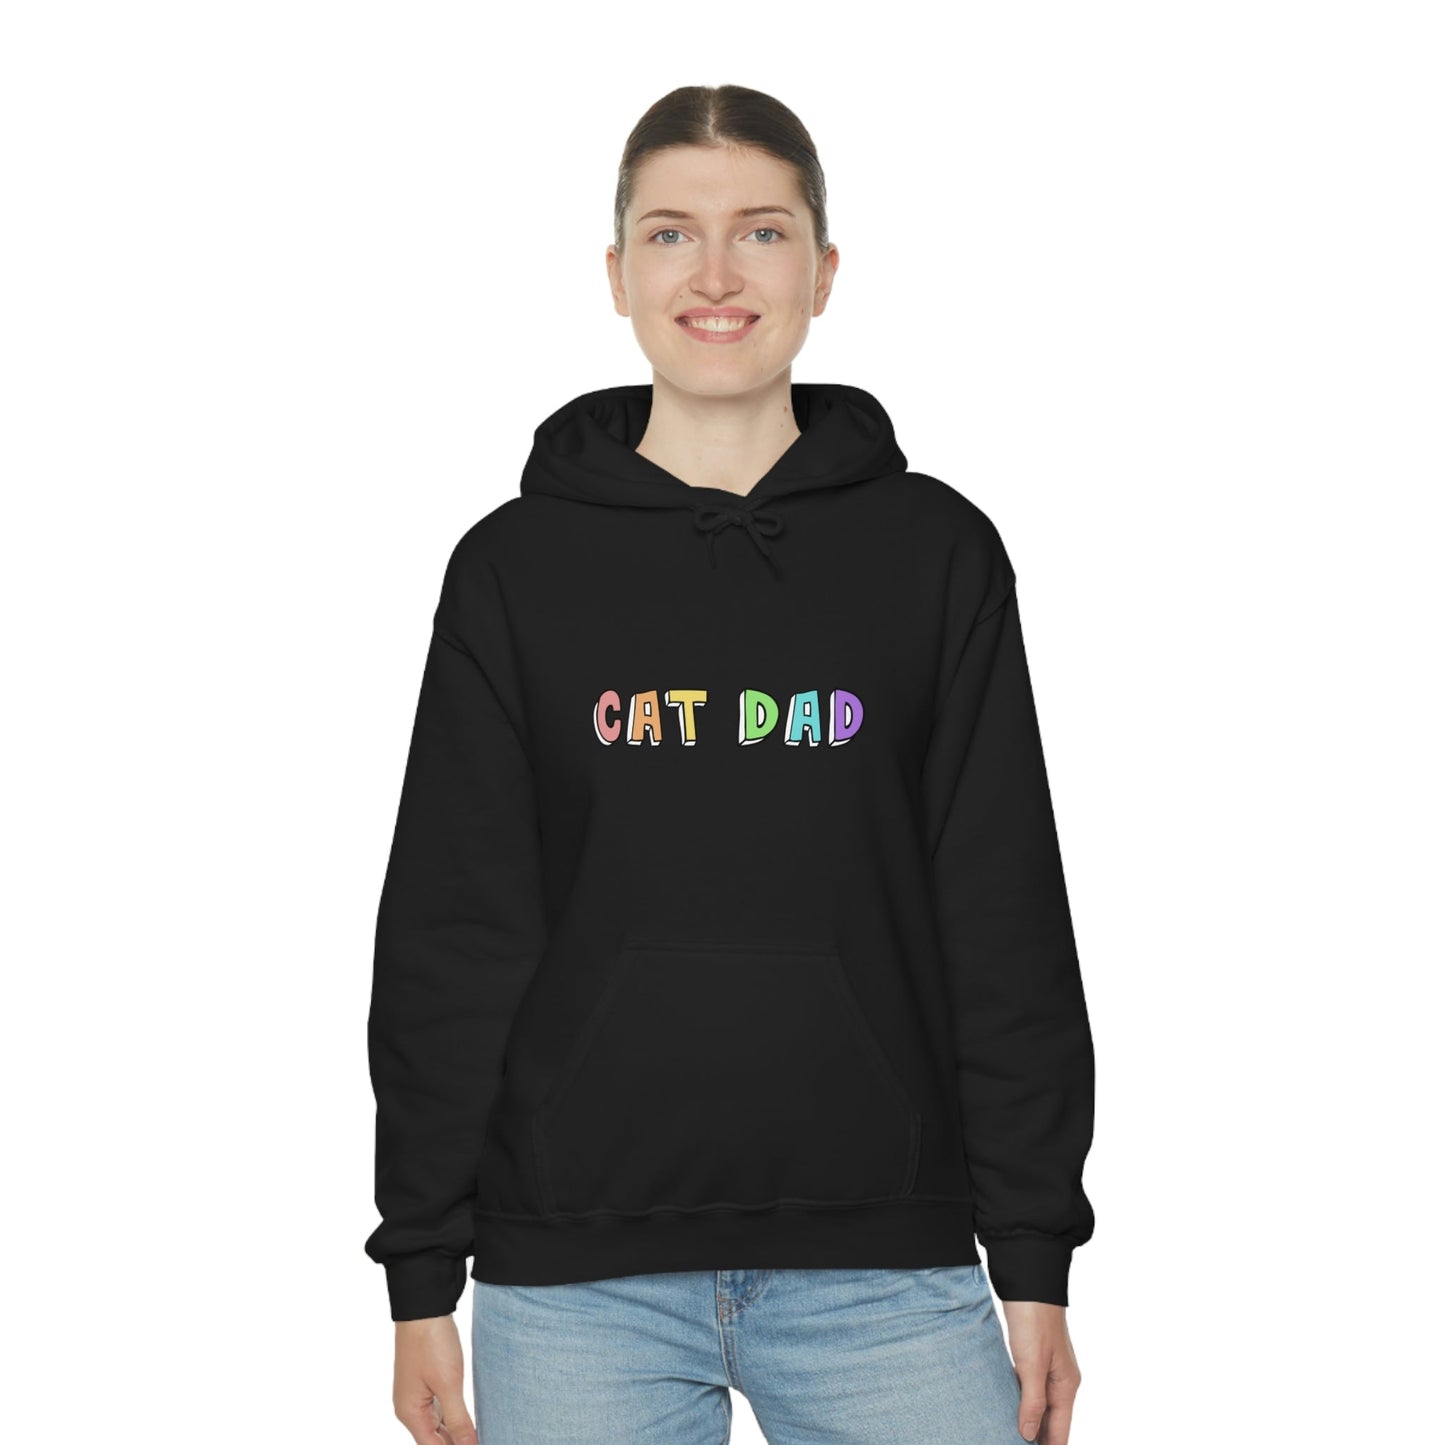 Cat Dad | Hooded Sweatshirt - Detezi Designs-21932531301523335081